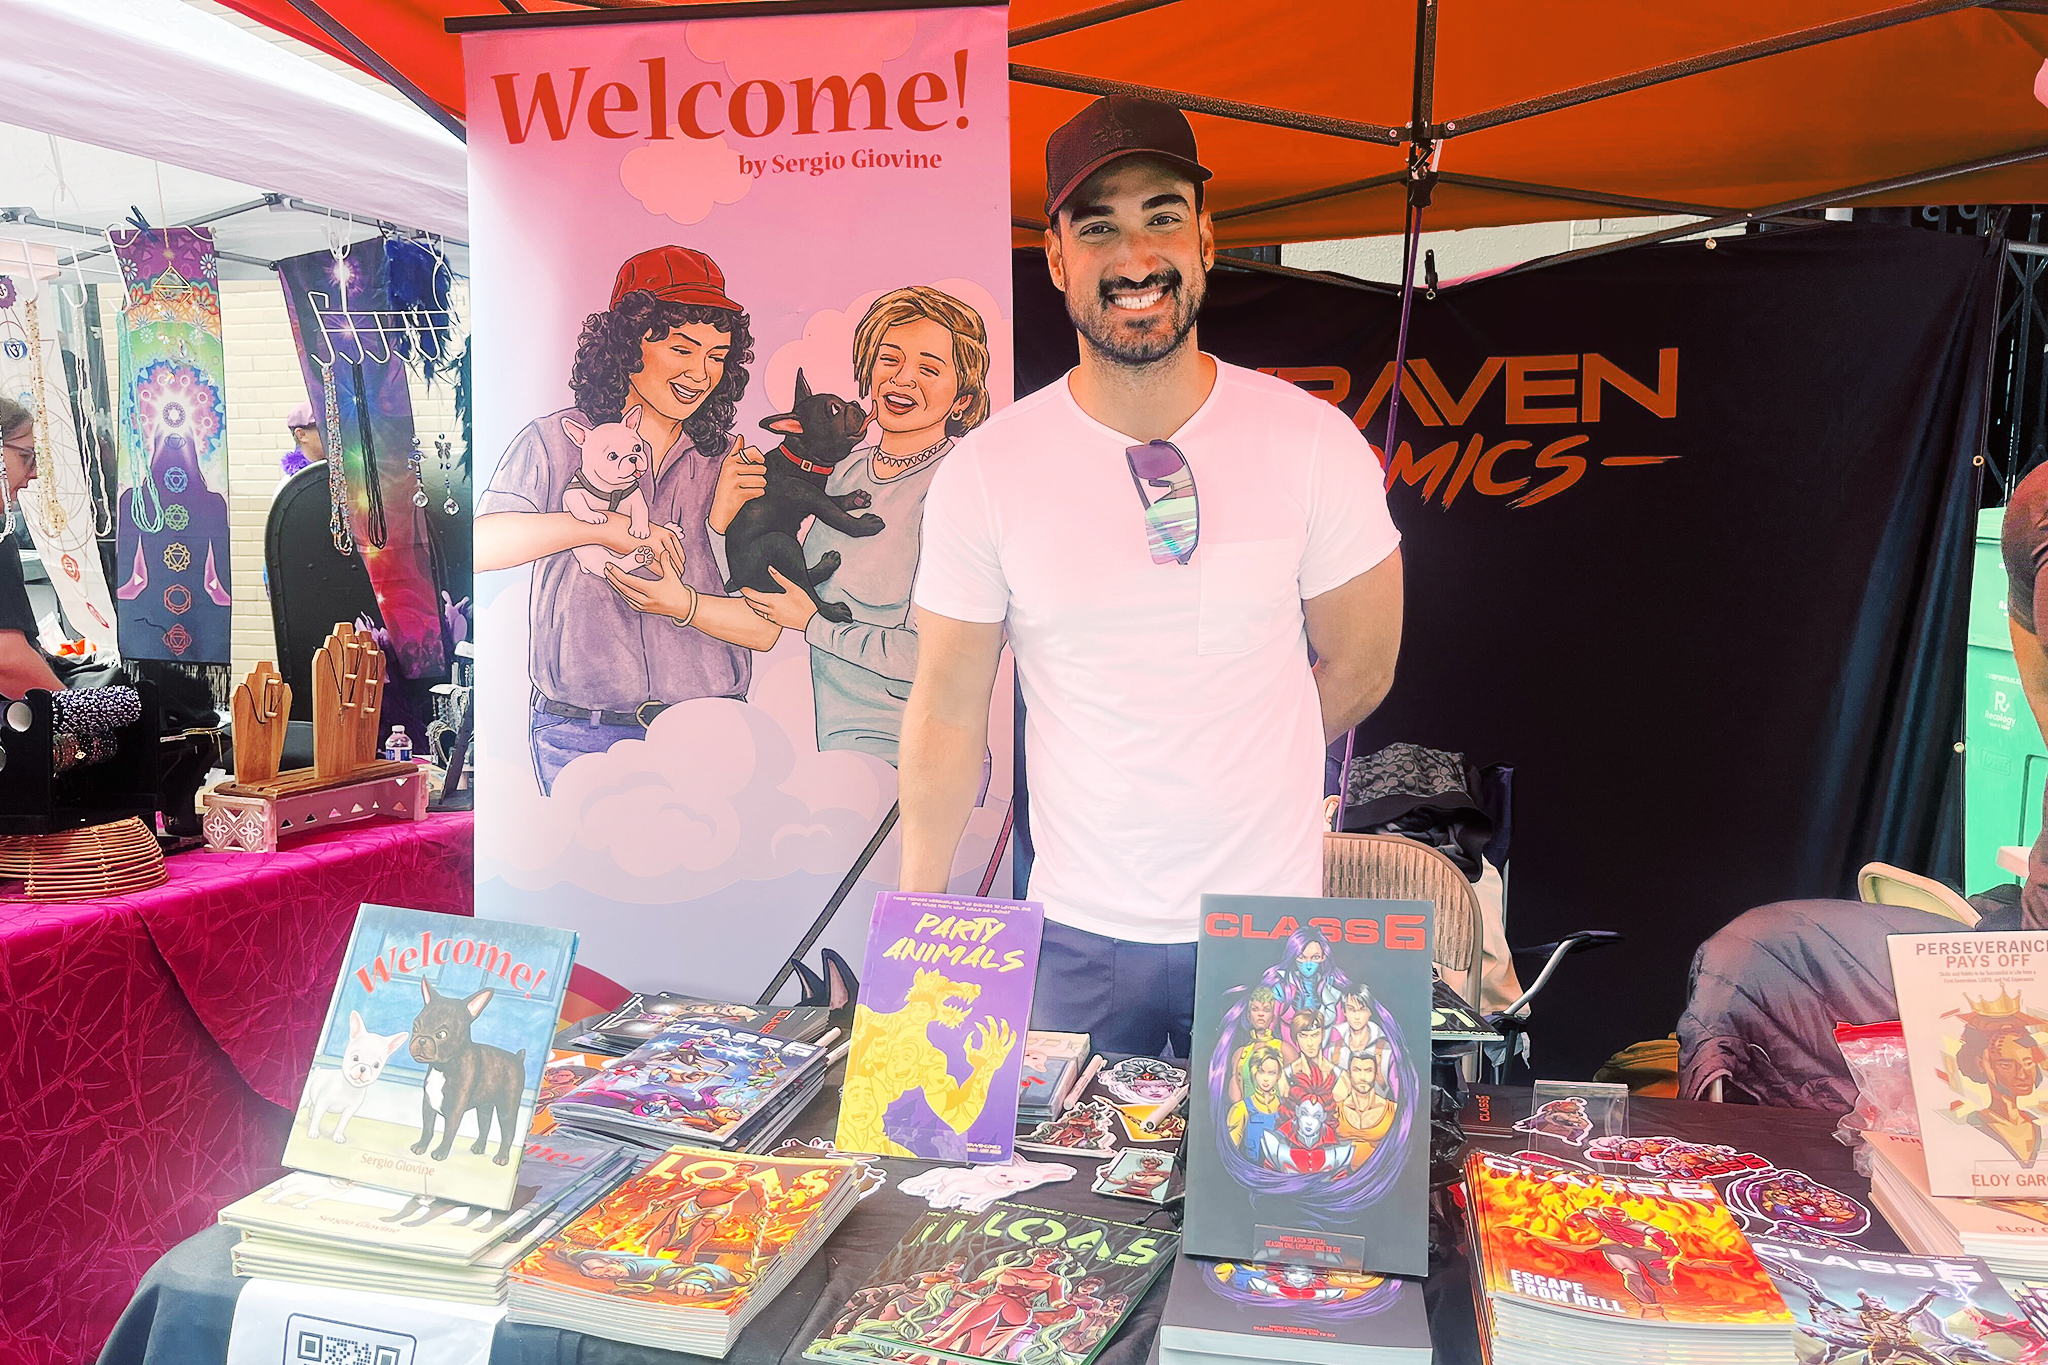 San Francisco LGBTQ comic artist fights back against book bans